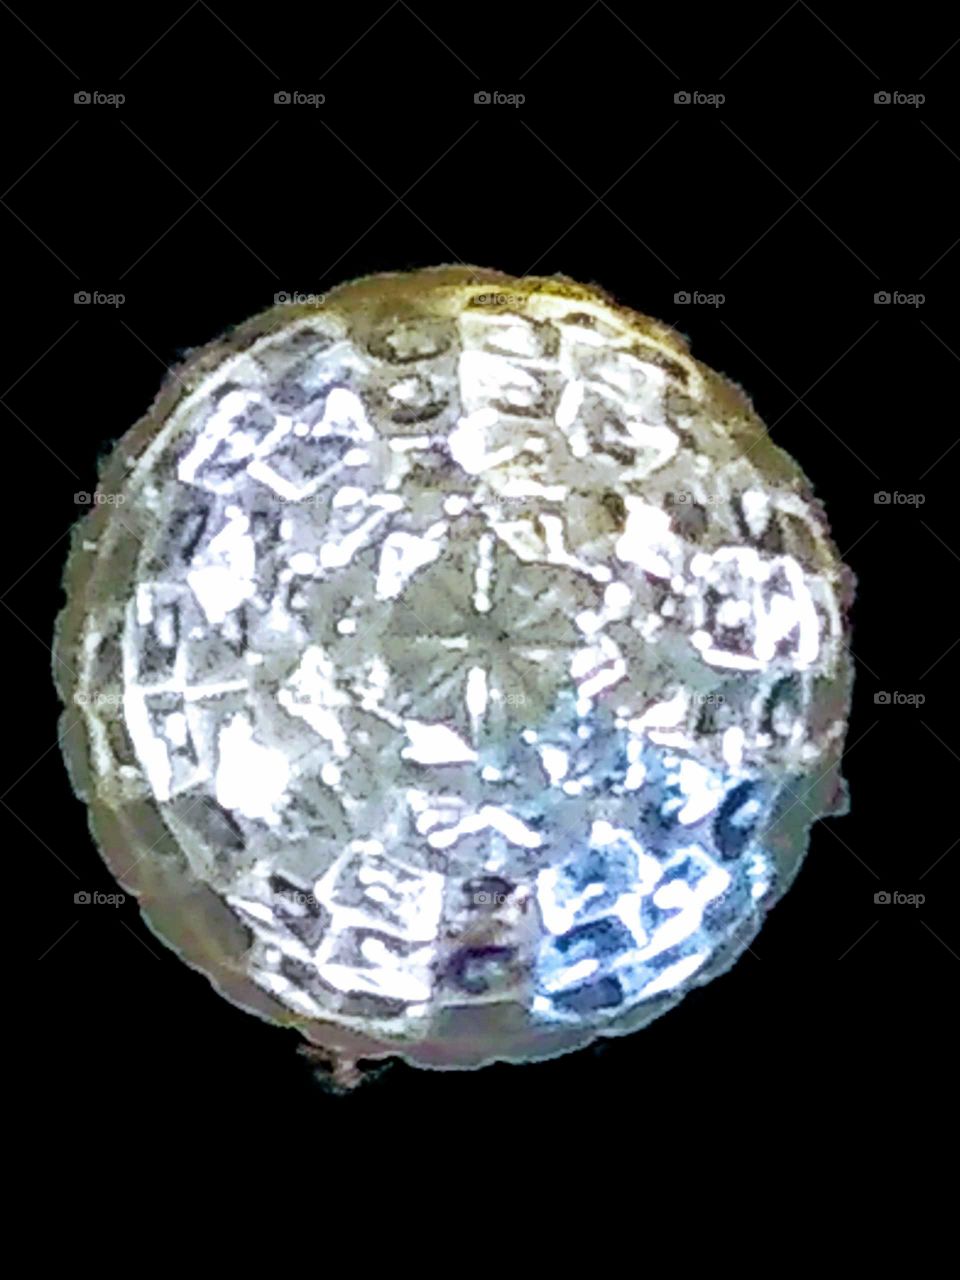 a diamond light